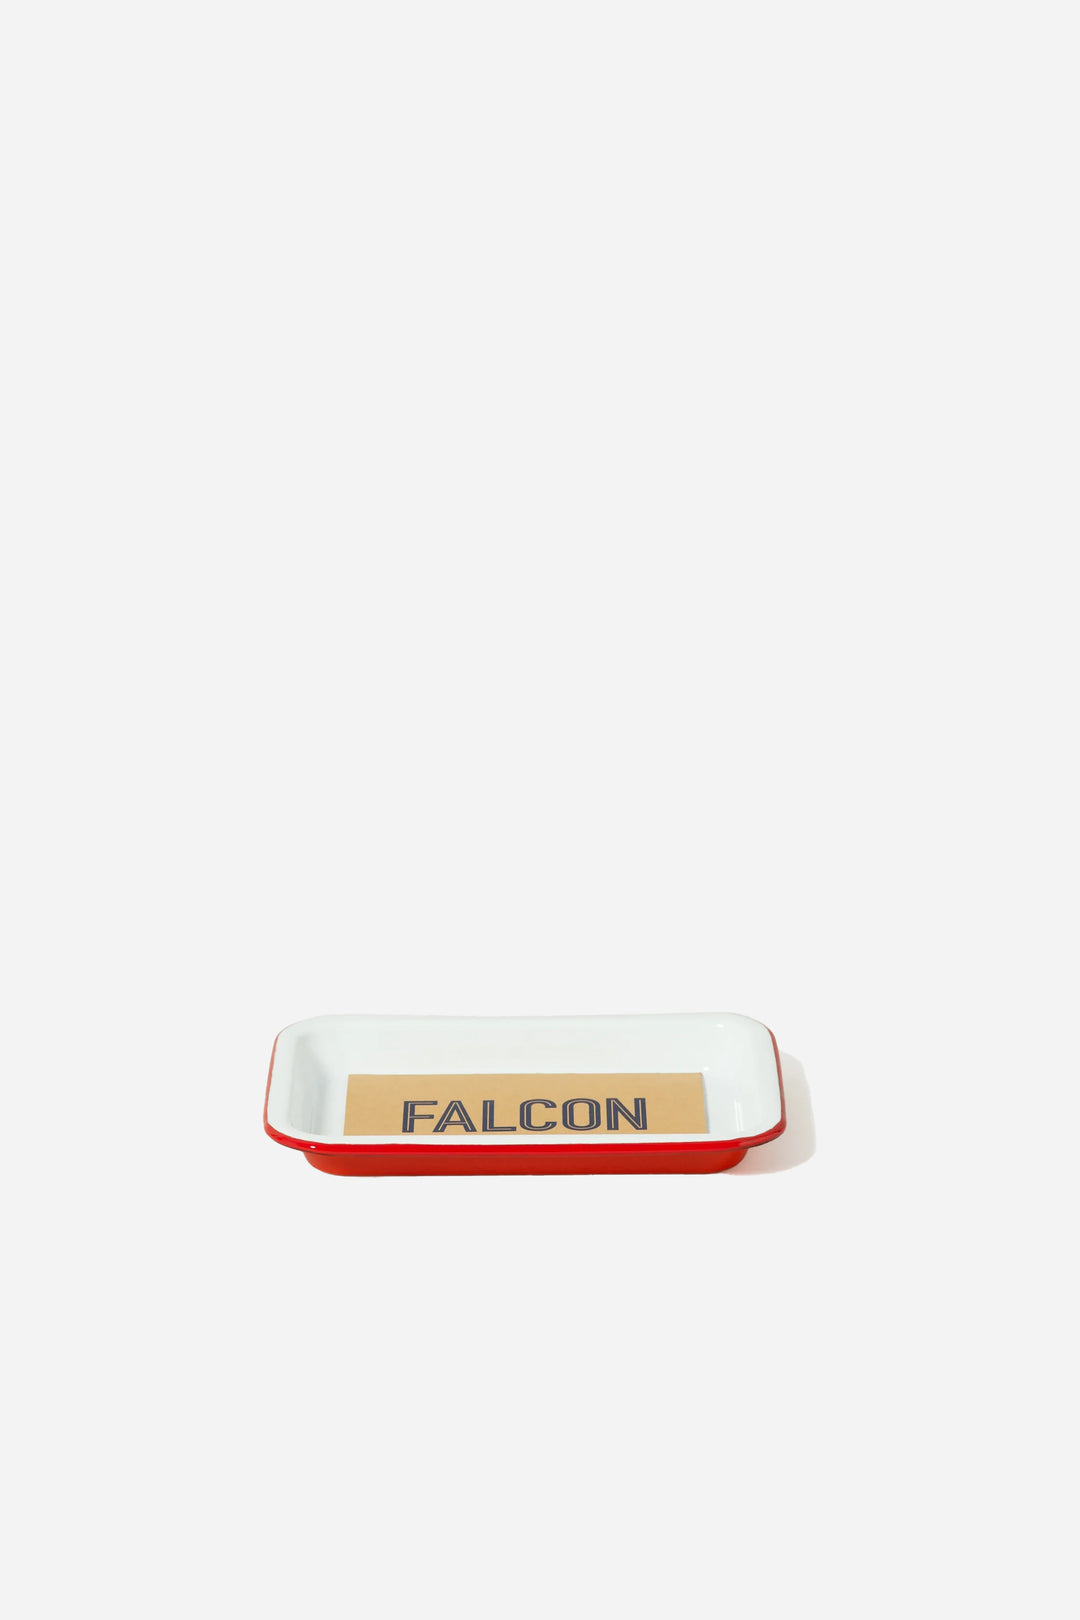 Falcon Small Tray / Pillarbox Red